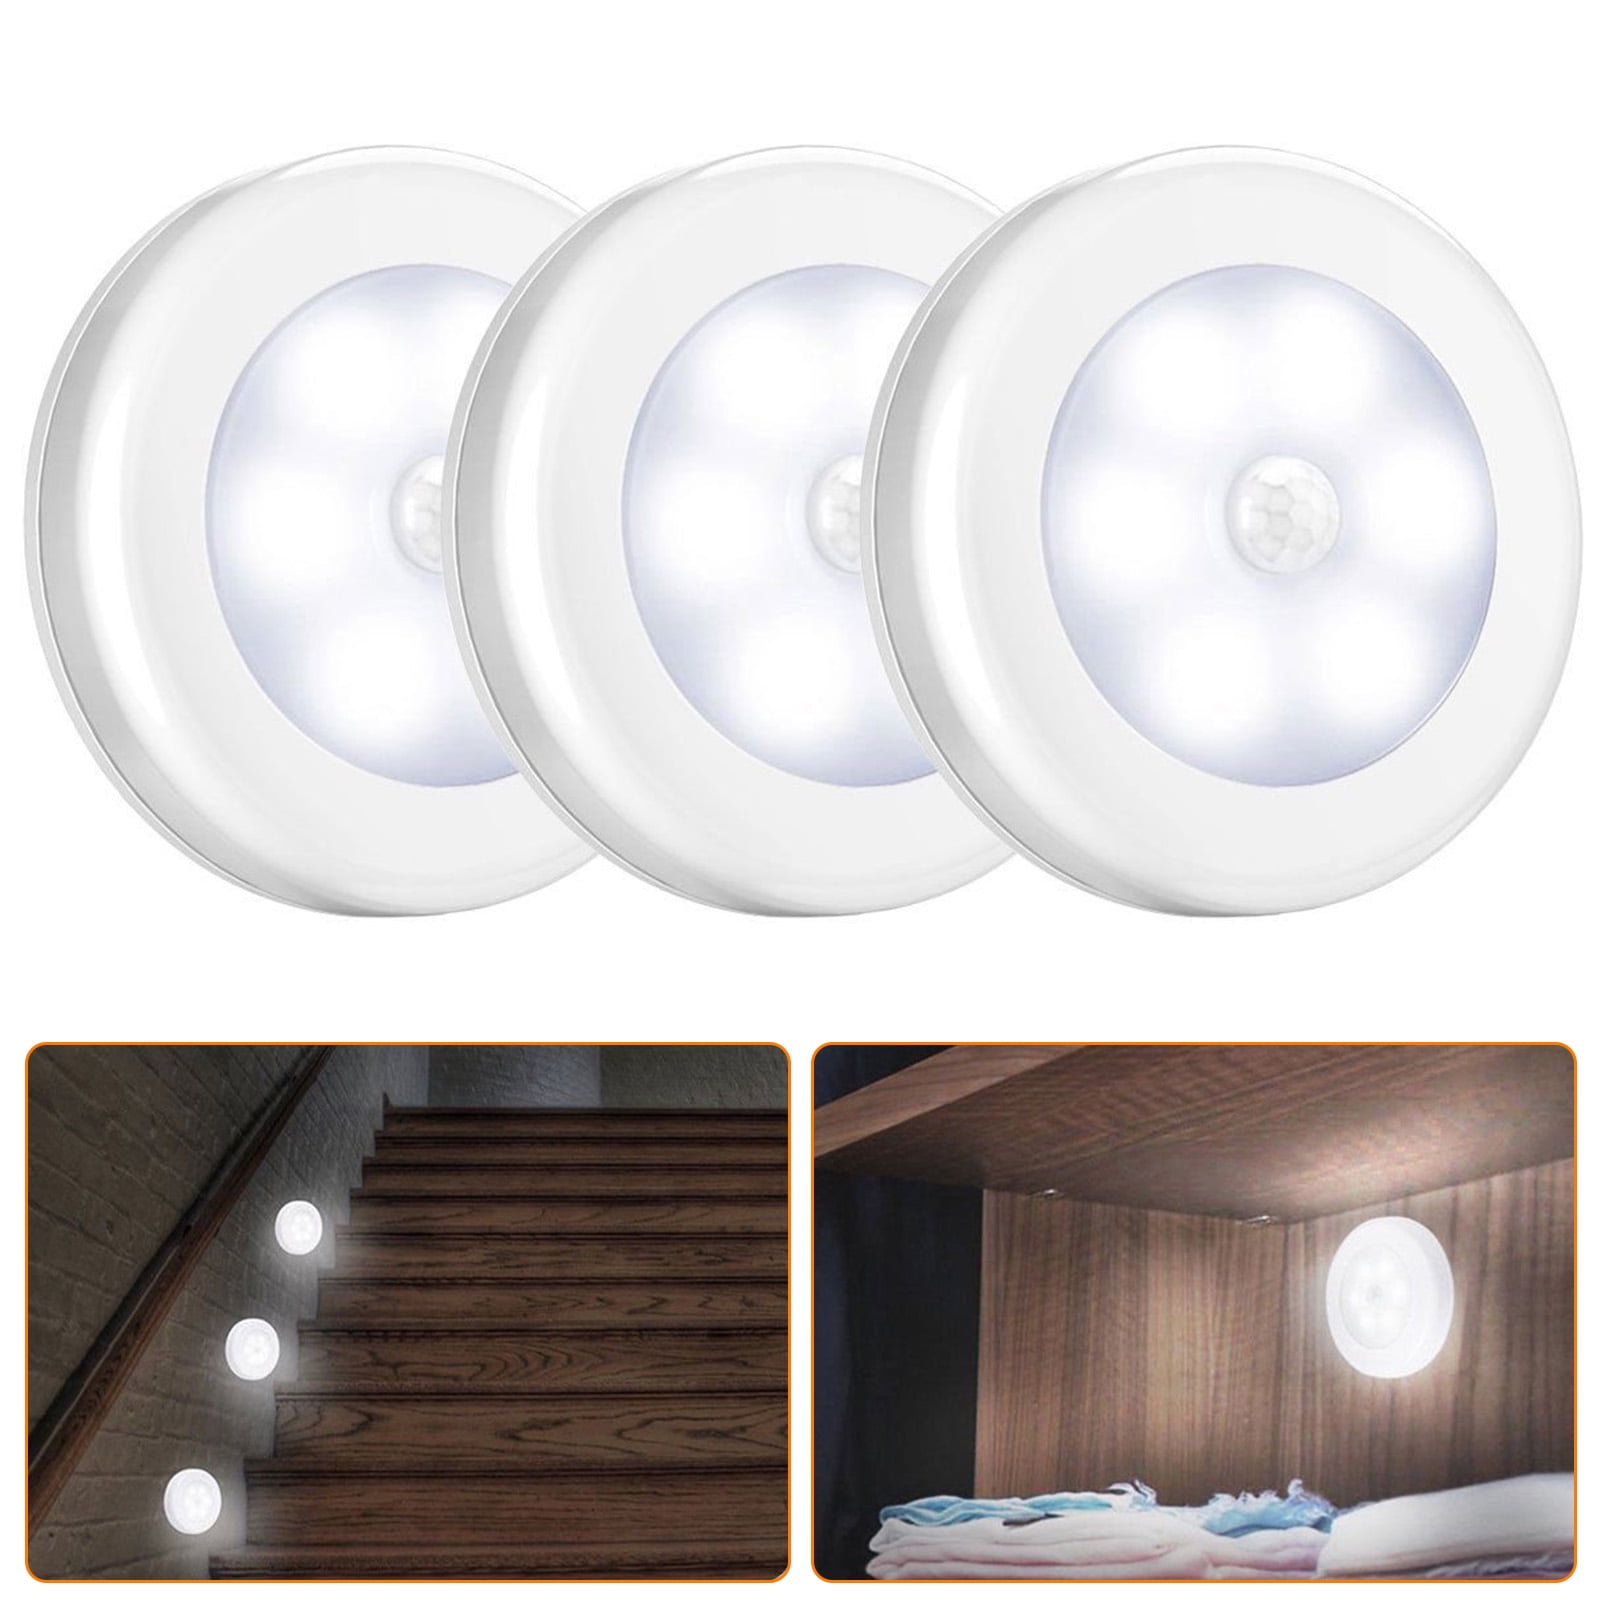 Motion Auto Sensor LED Night Puck Lights Kitchen Cabinet Closet Room Wall Lamps 